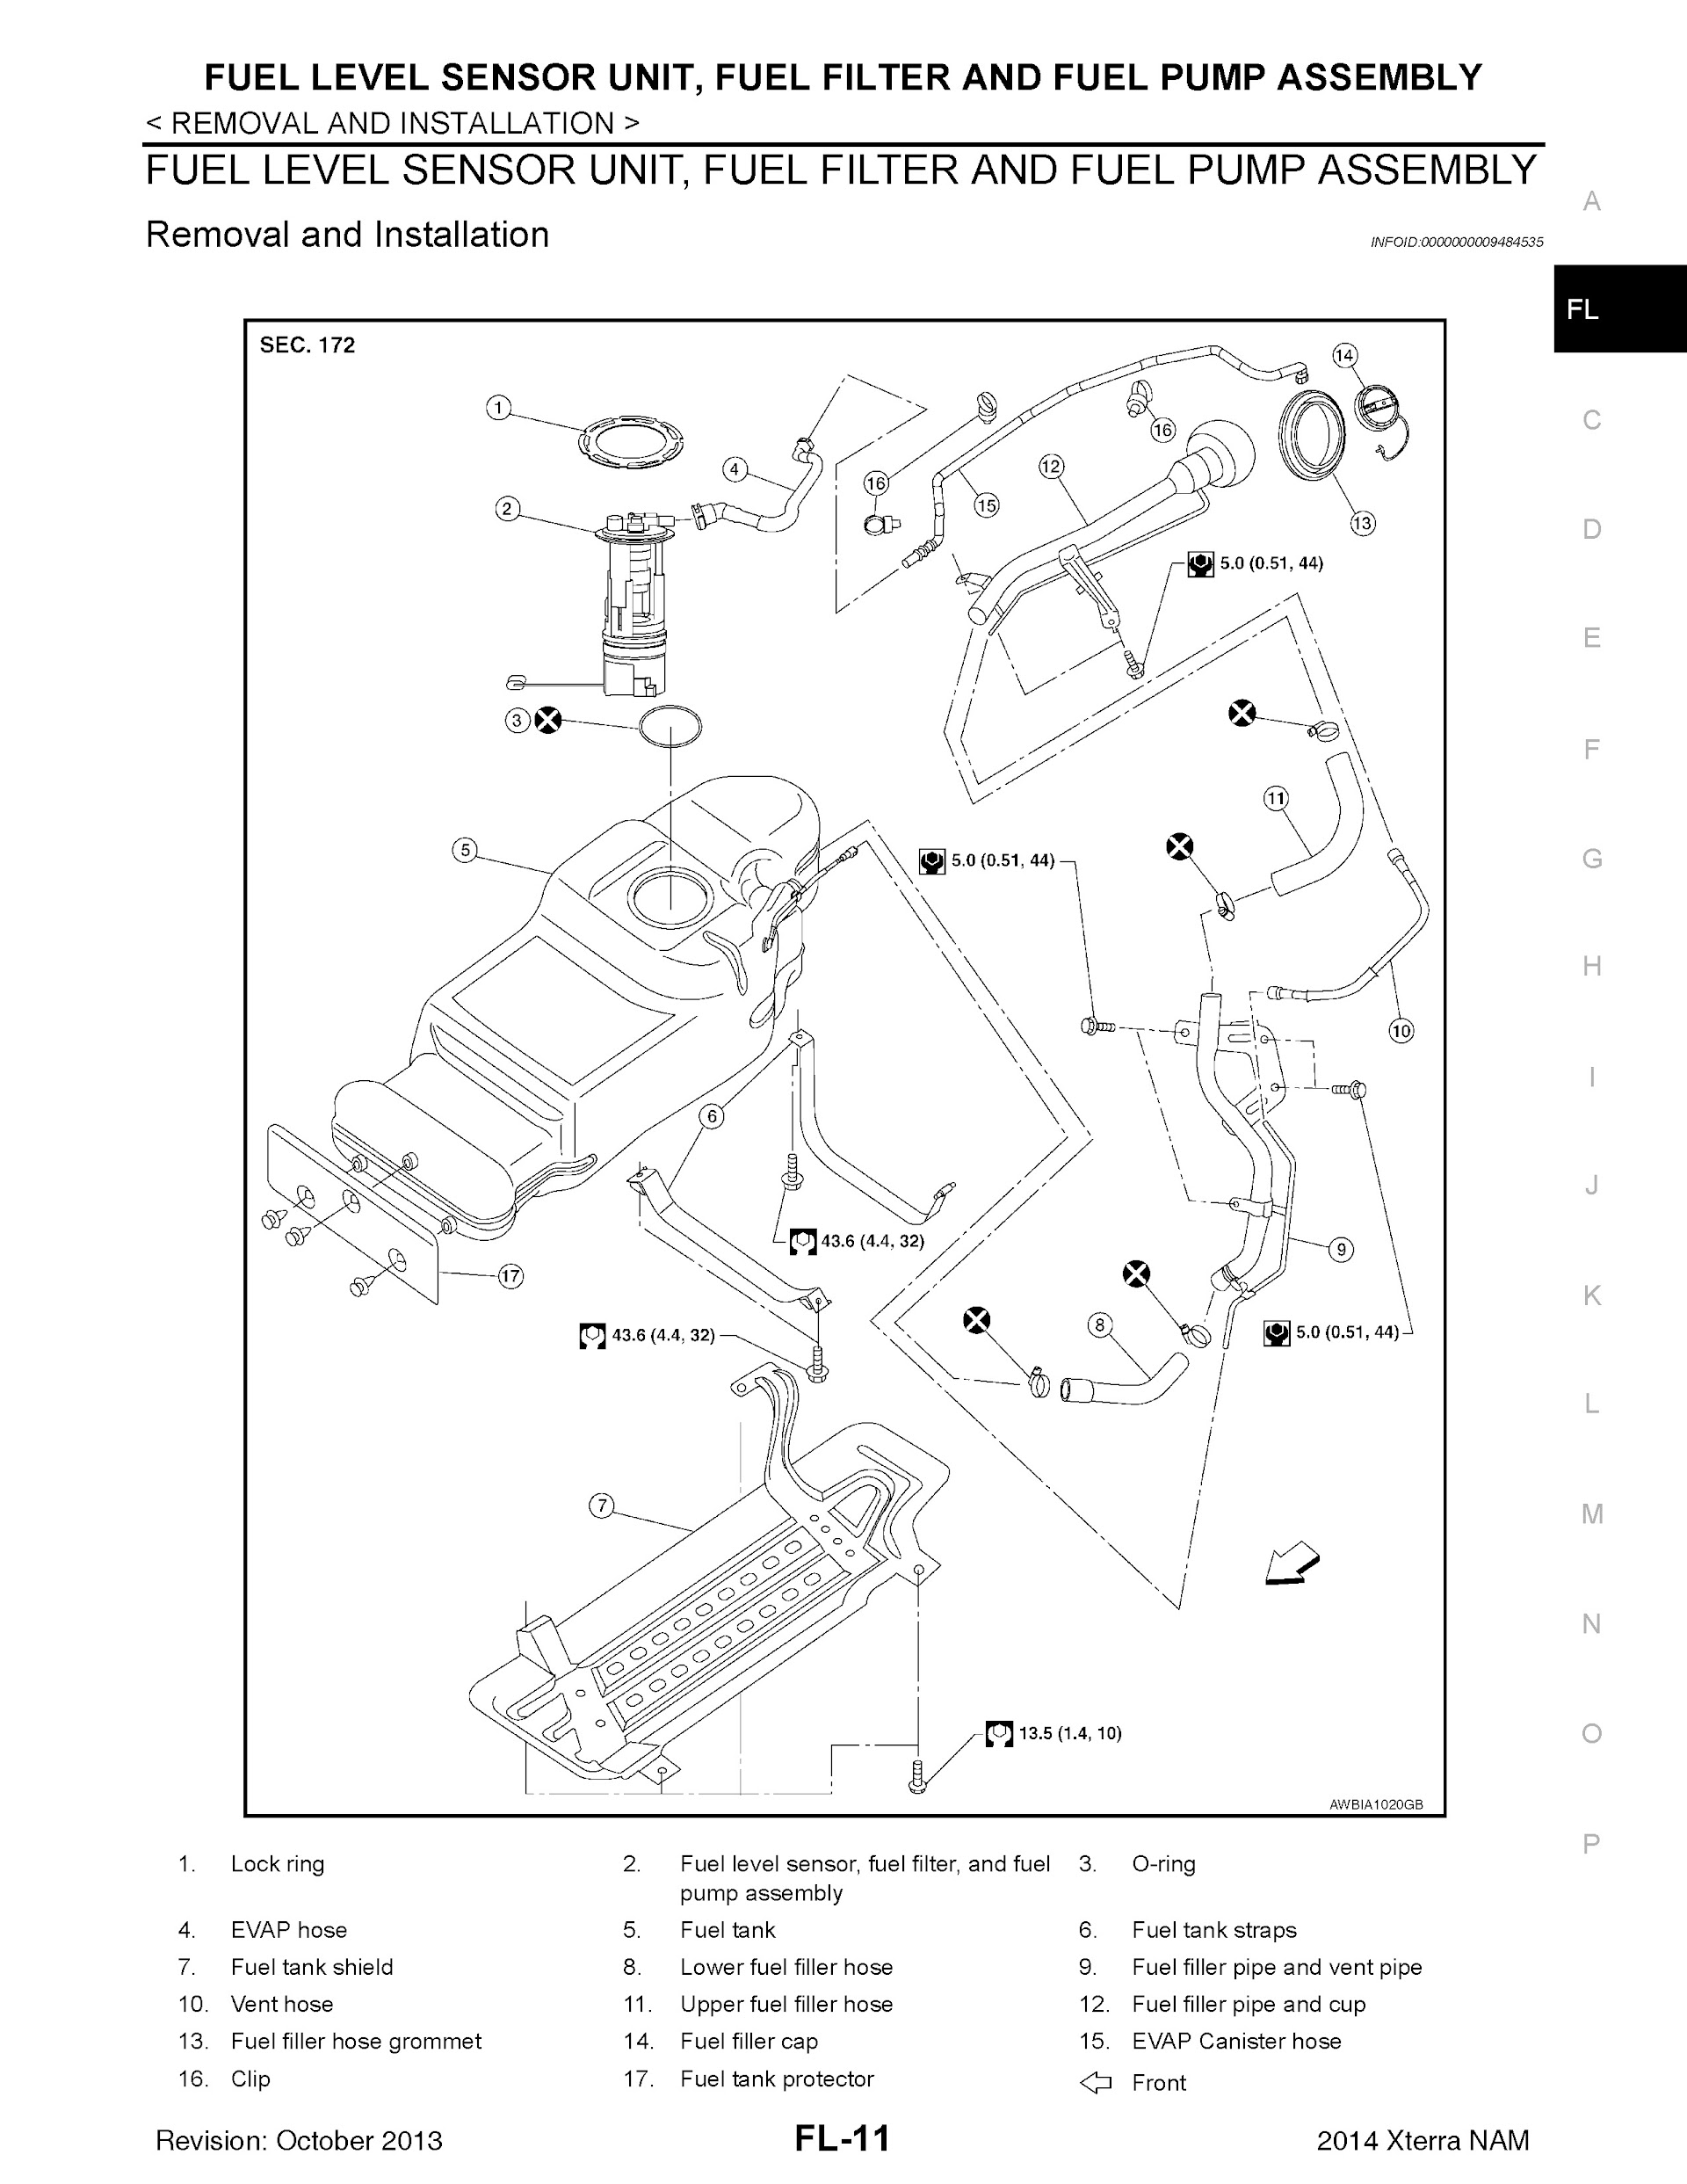 2014 Nissan Xterra Repair Manual, Fuel System